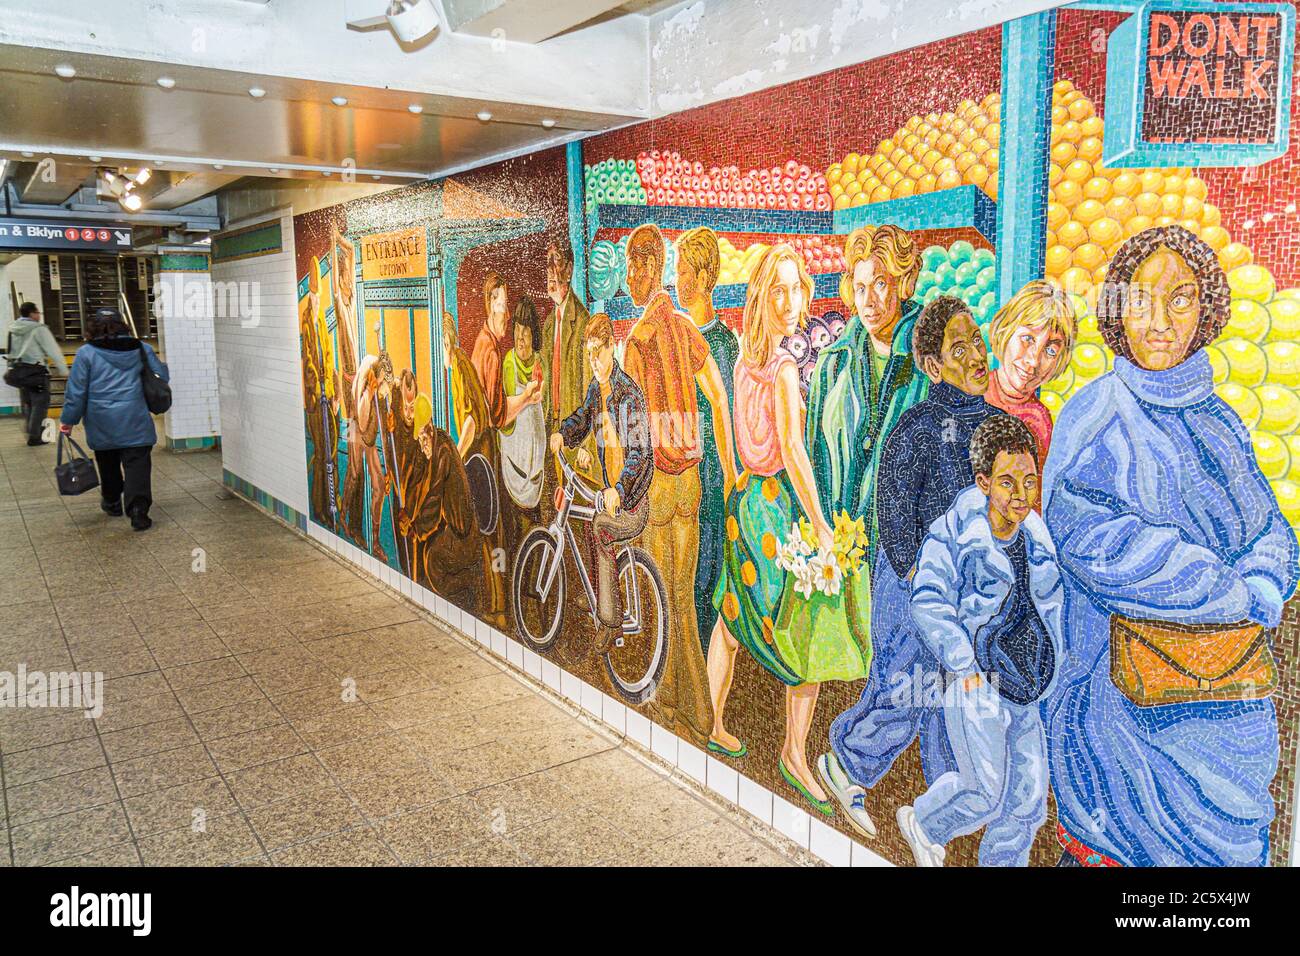 New York City,NYC NY Manhattan,Midtown,MTA,New York City,sistema della metropolitana,Times Square Station,1 2 3 N Q R S Highway Route,murale in vetro mosaico,Jack Beal,A. Foto Stock